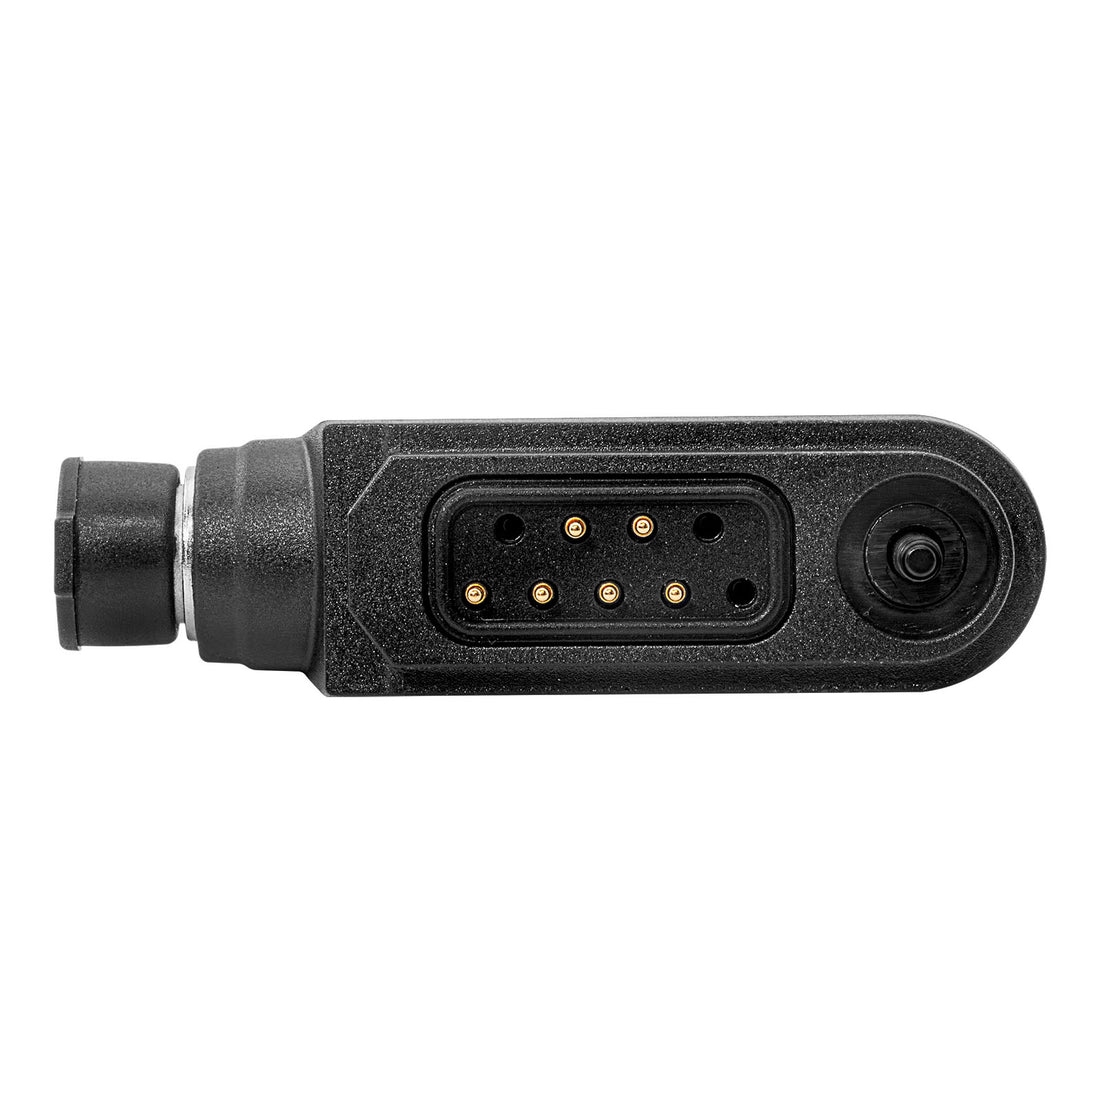 N-ear: Quick Disconnect (HIROSE) to L3 Harris XL Adaptor